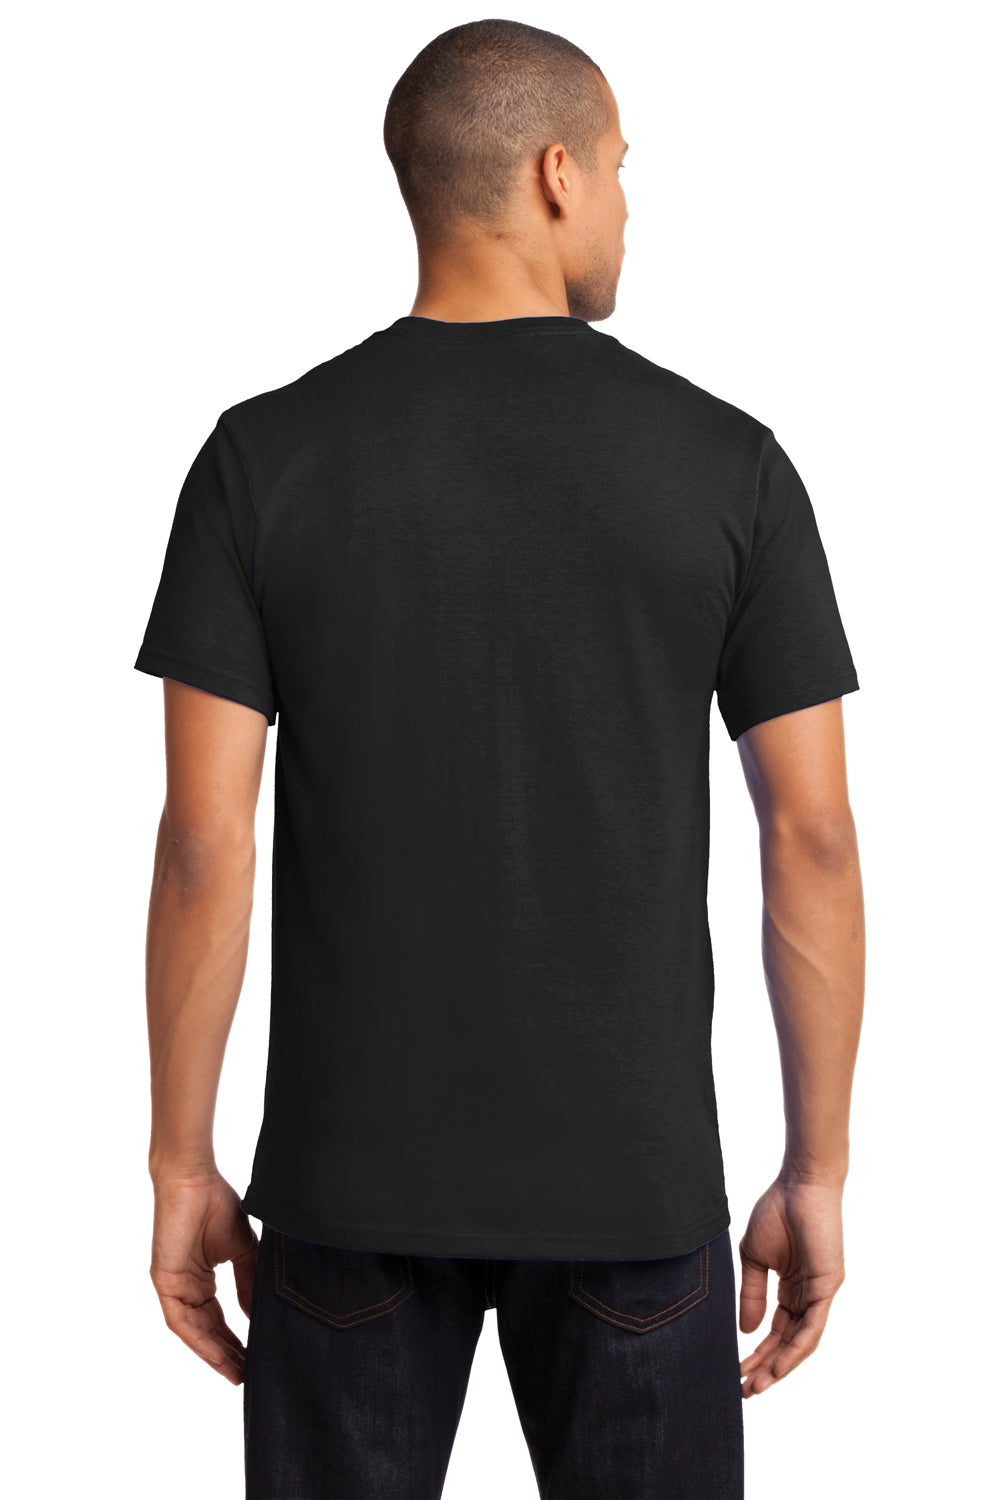 Port & Company PC61P Mens Essential Short Sleeve Crewneck T-Shirt w/ Pocket Black Back